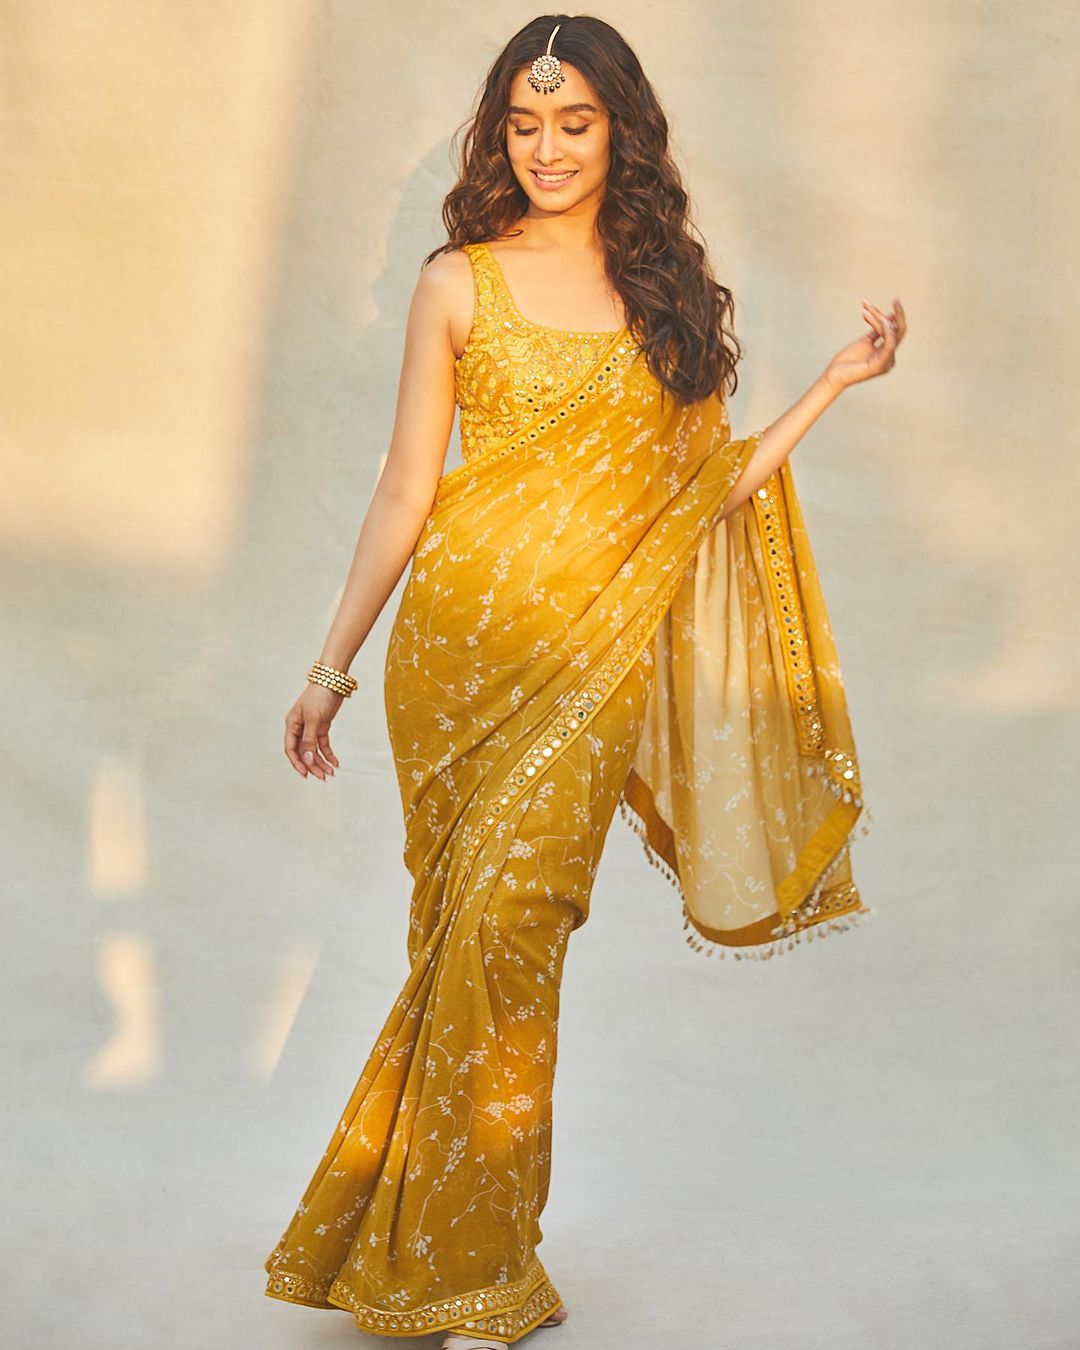 Shraddha Kapoor looks beautiful in the mustard yellow saree.